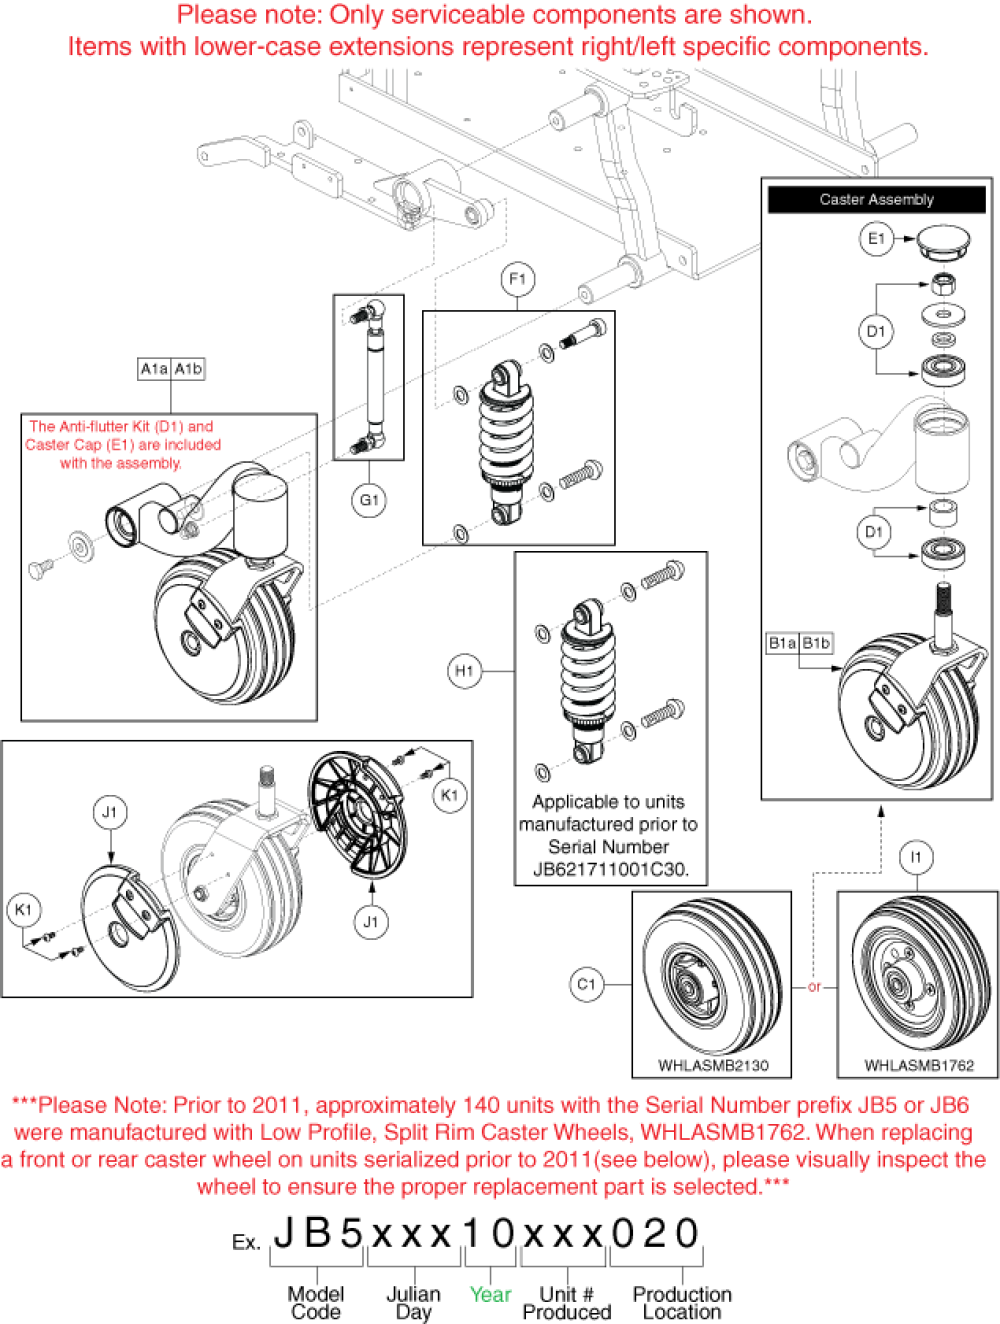 Front Caster Arm Assy - Standard parts diagram